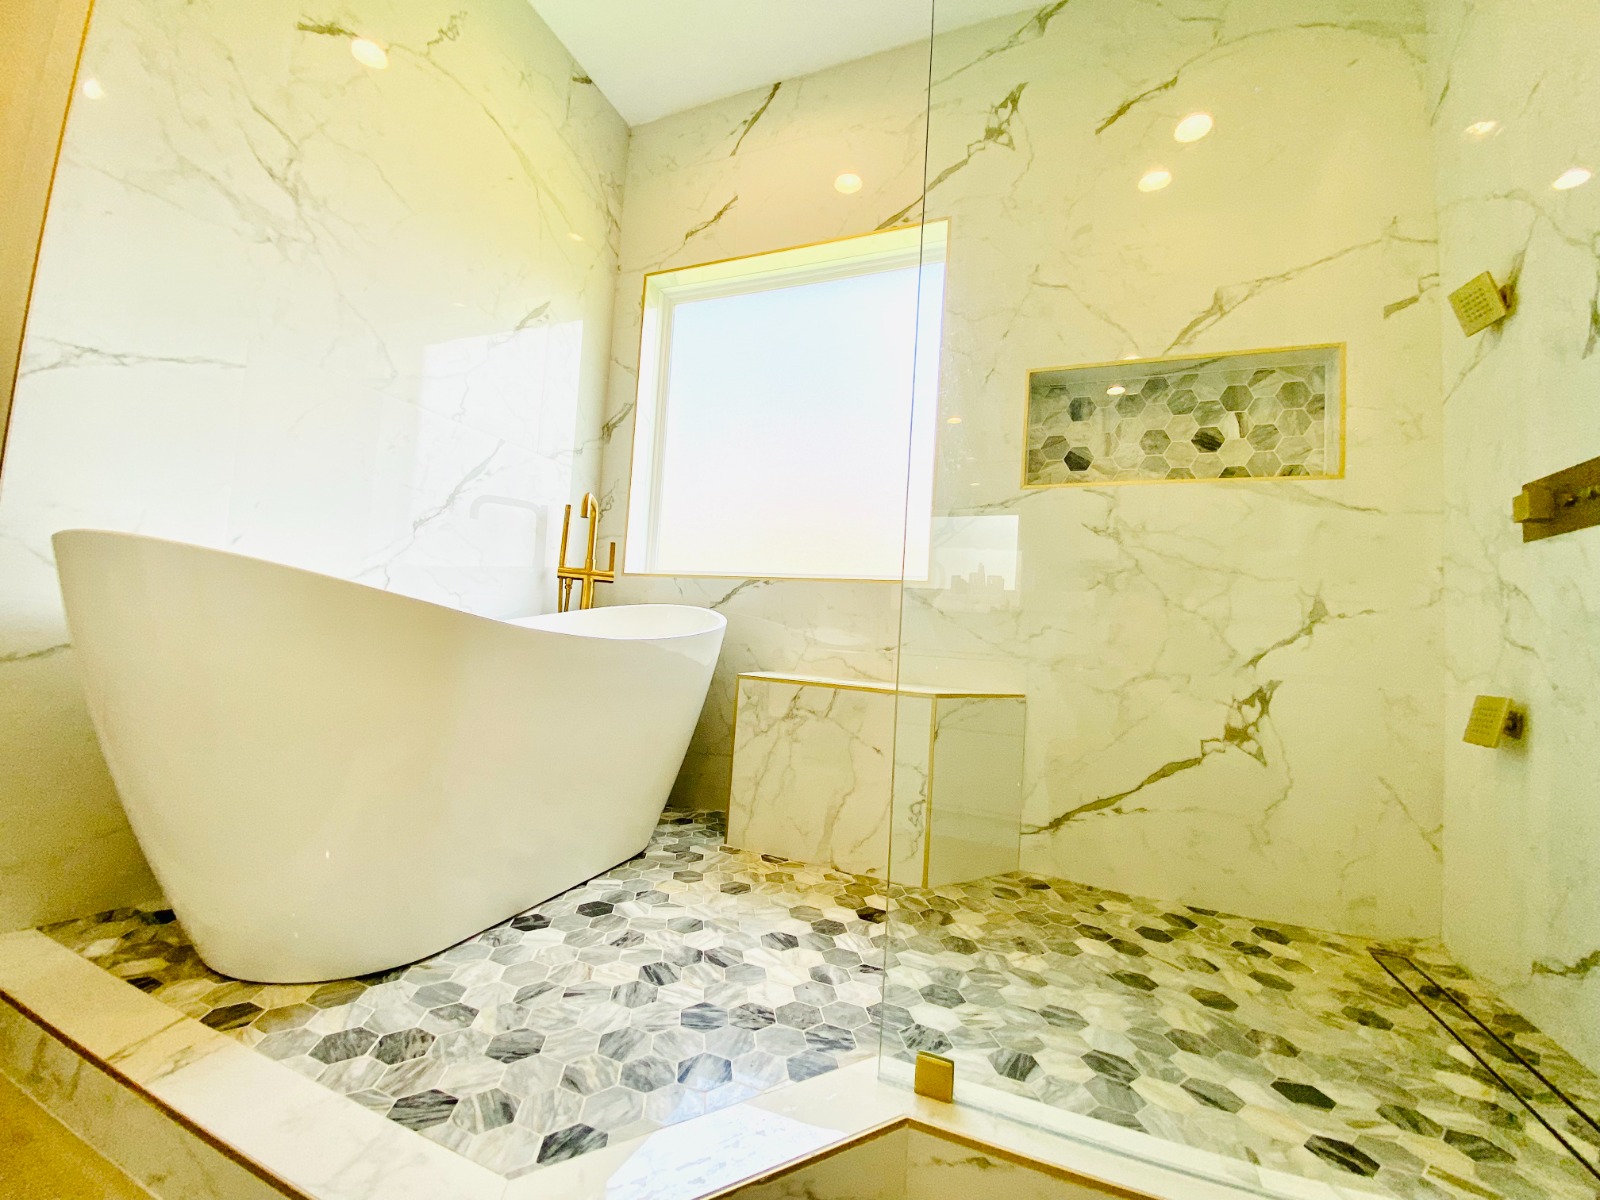 Viannis-Master-Bathroom-remodeling18